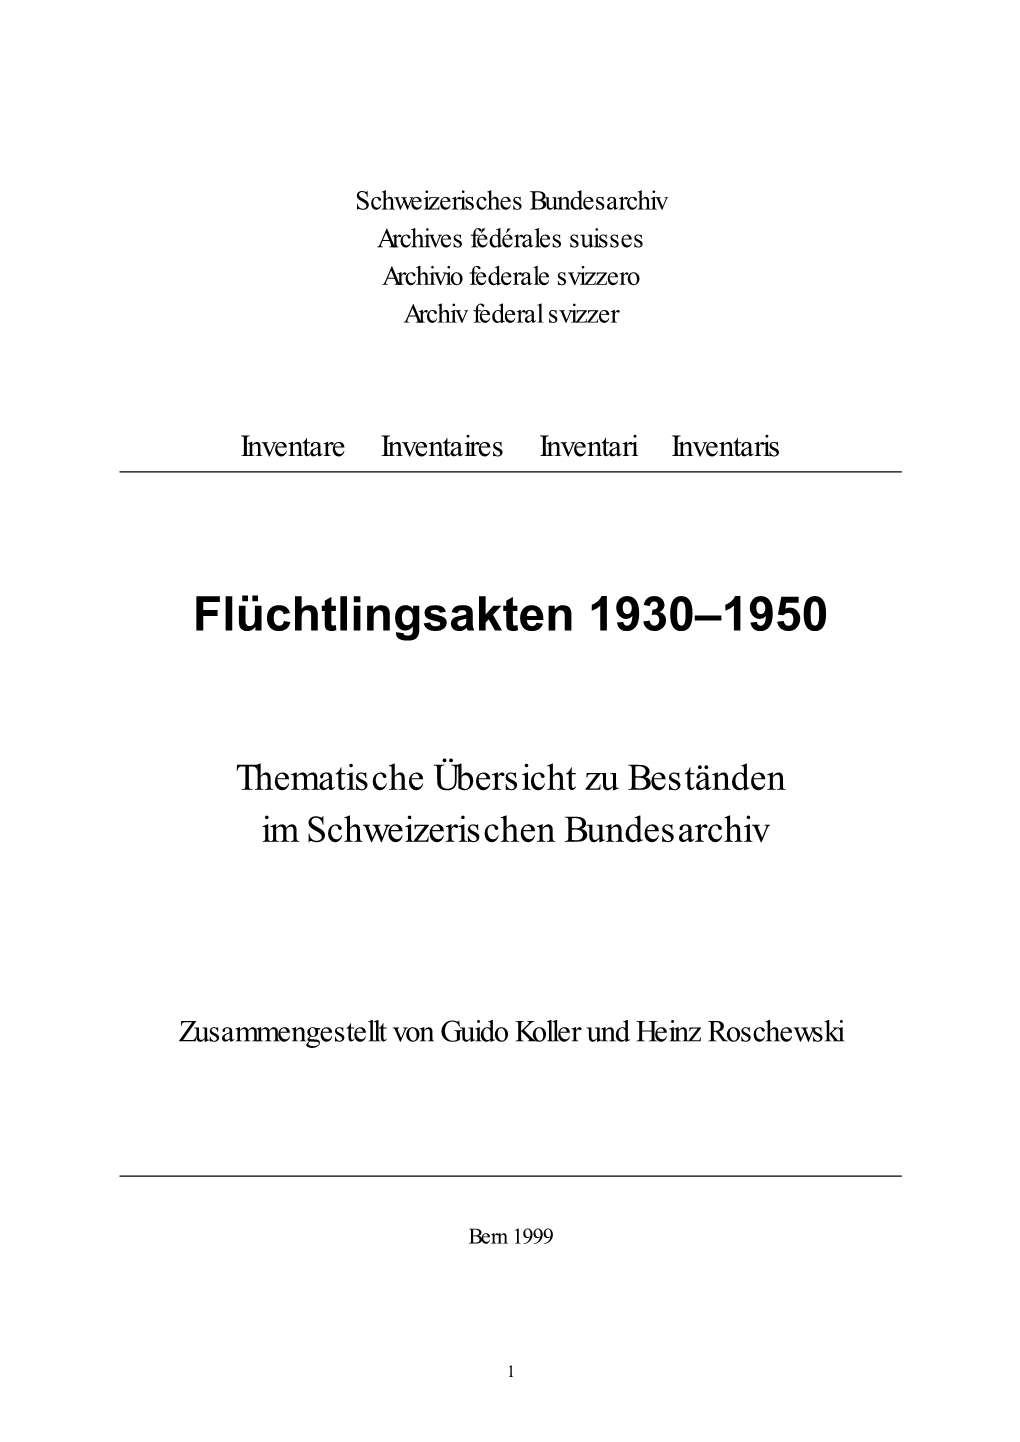 Flüchtlingsakten 1930–1950